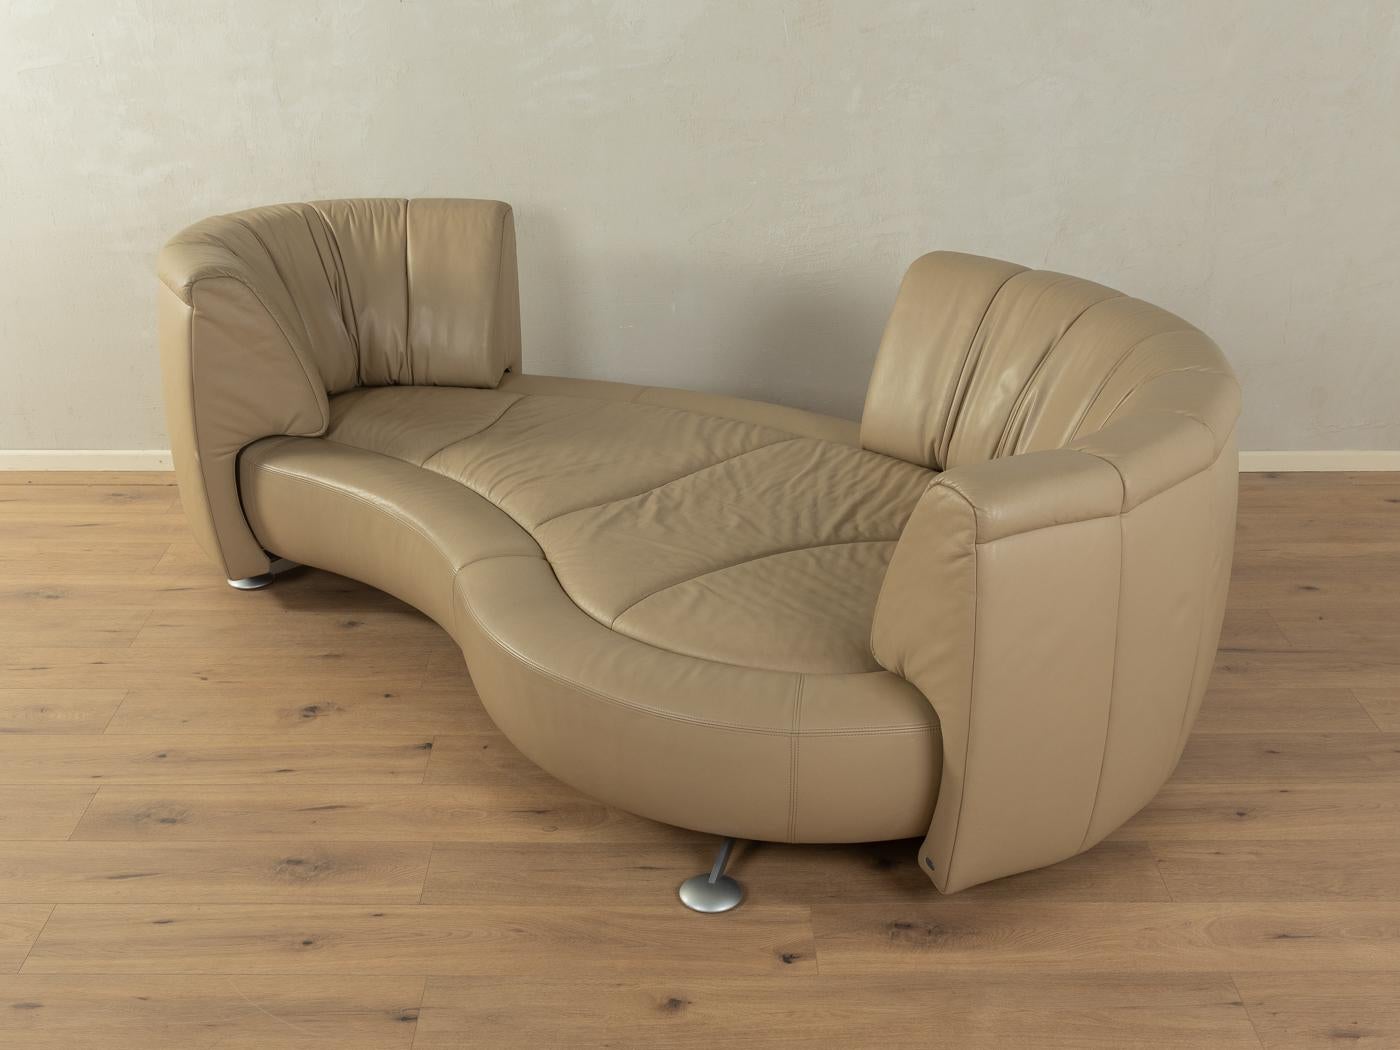 Swiss  Sofa, DS-164/30, de Sede  For Sale